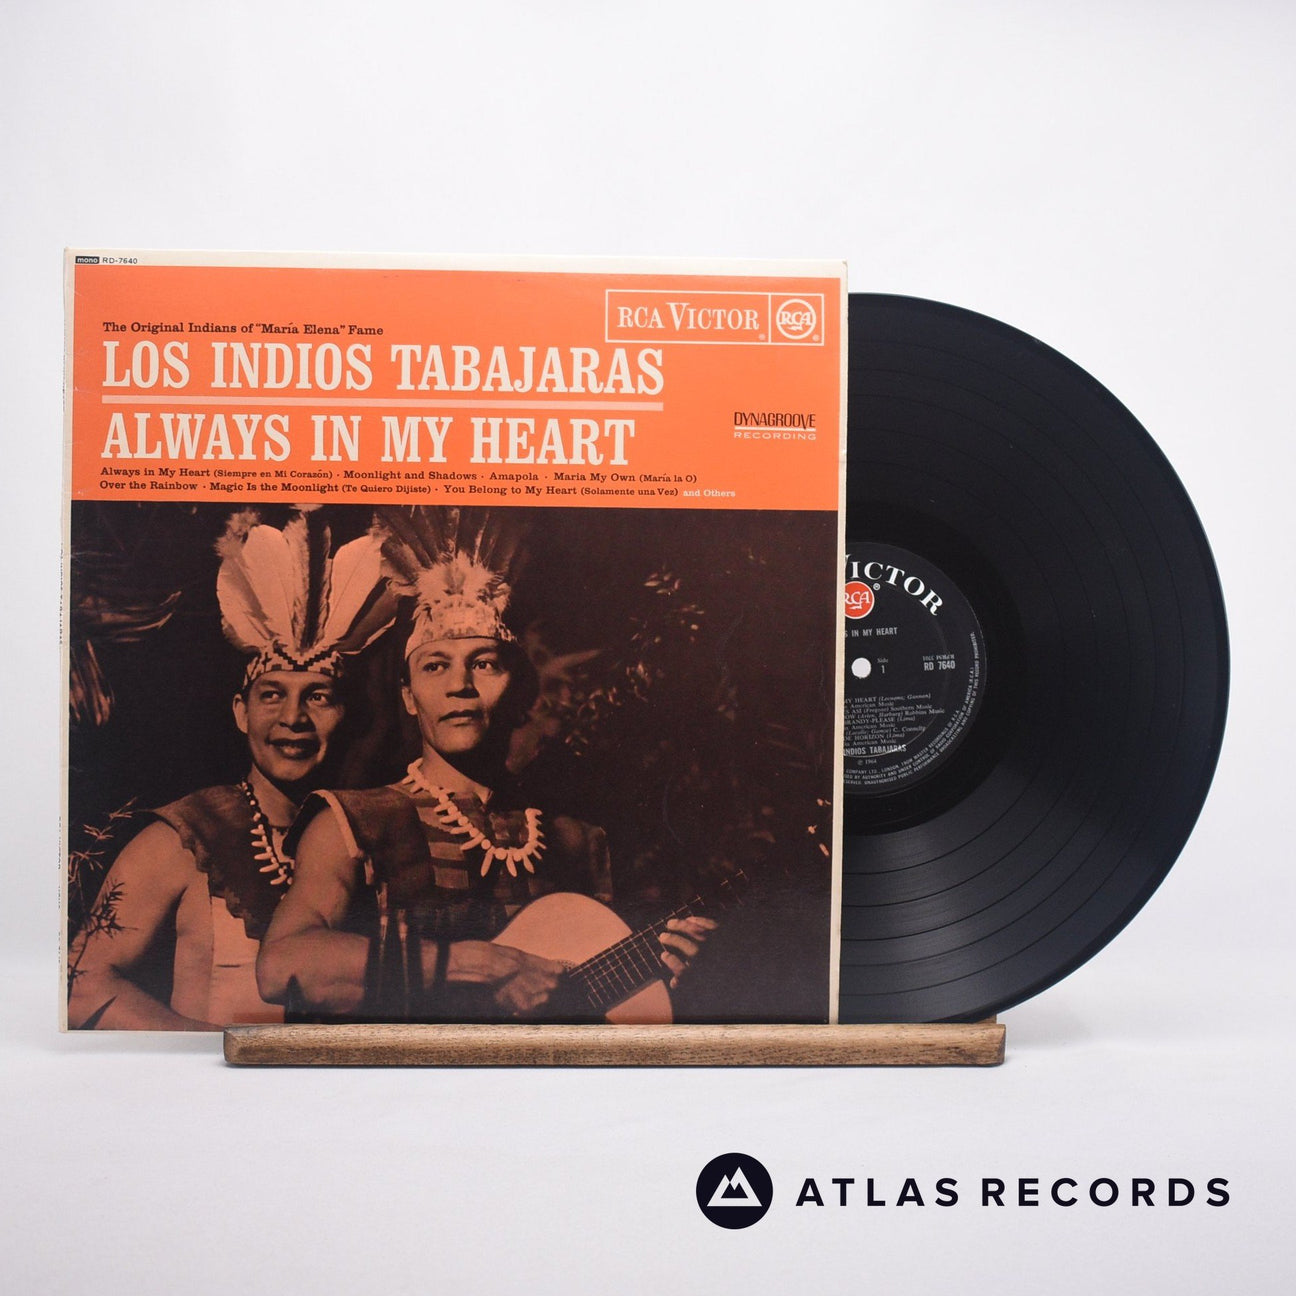 Los Indios Tabajaras Always In My Heart LP Vinyl Record - Front Cover & Record